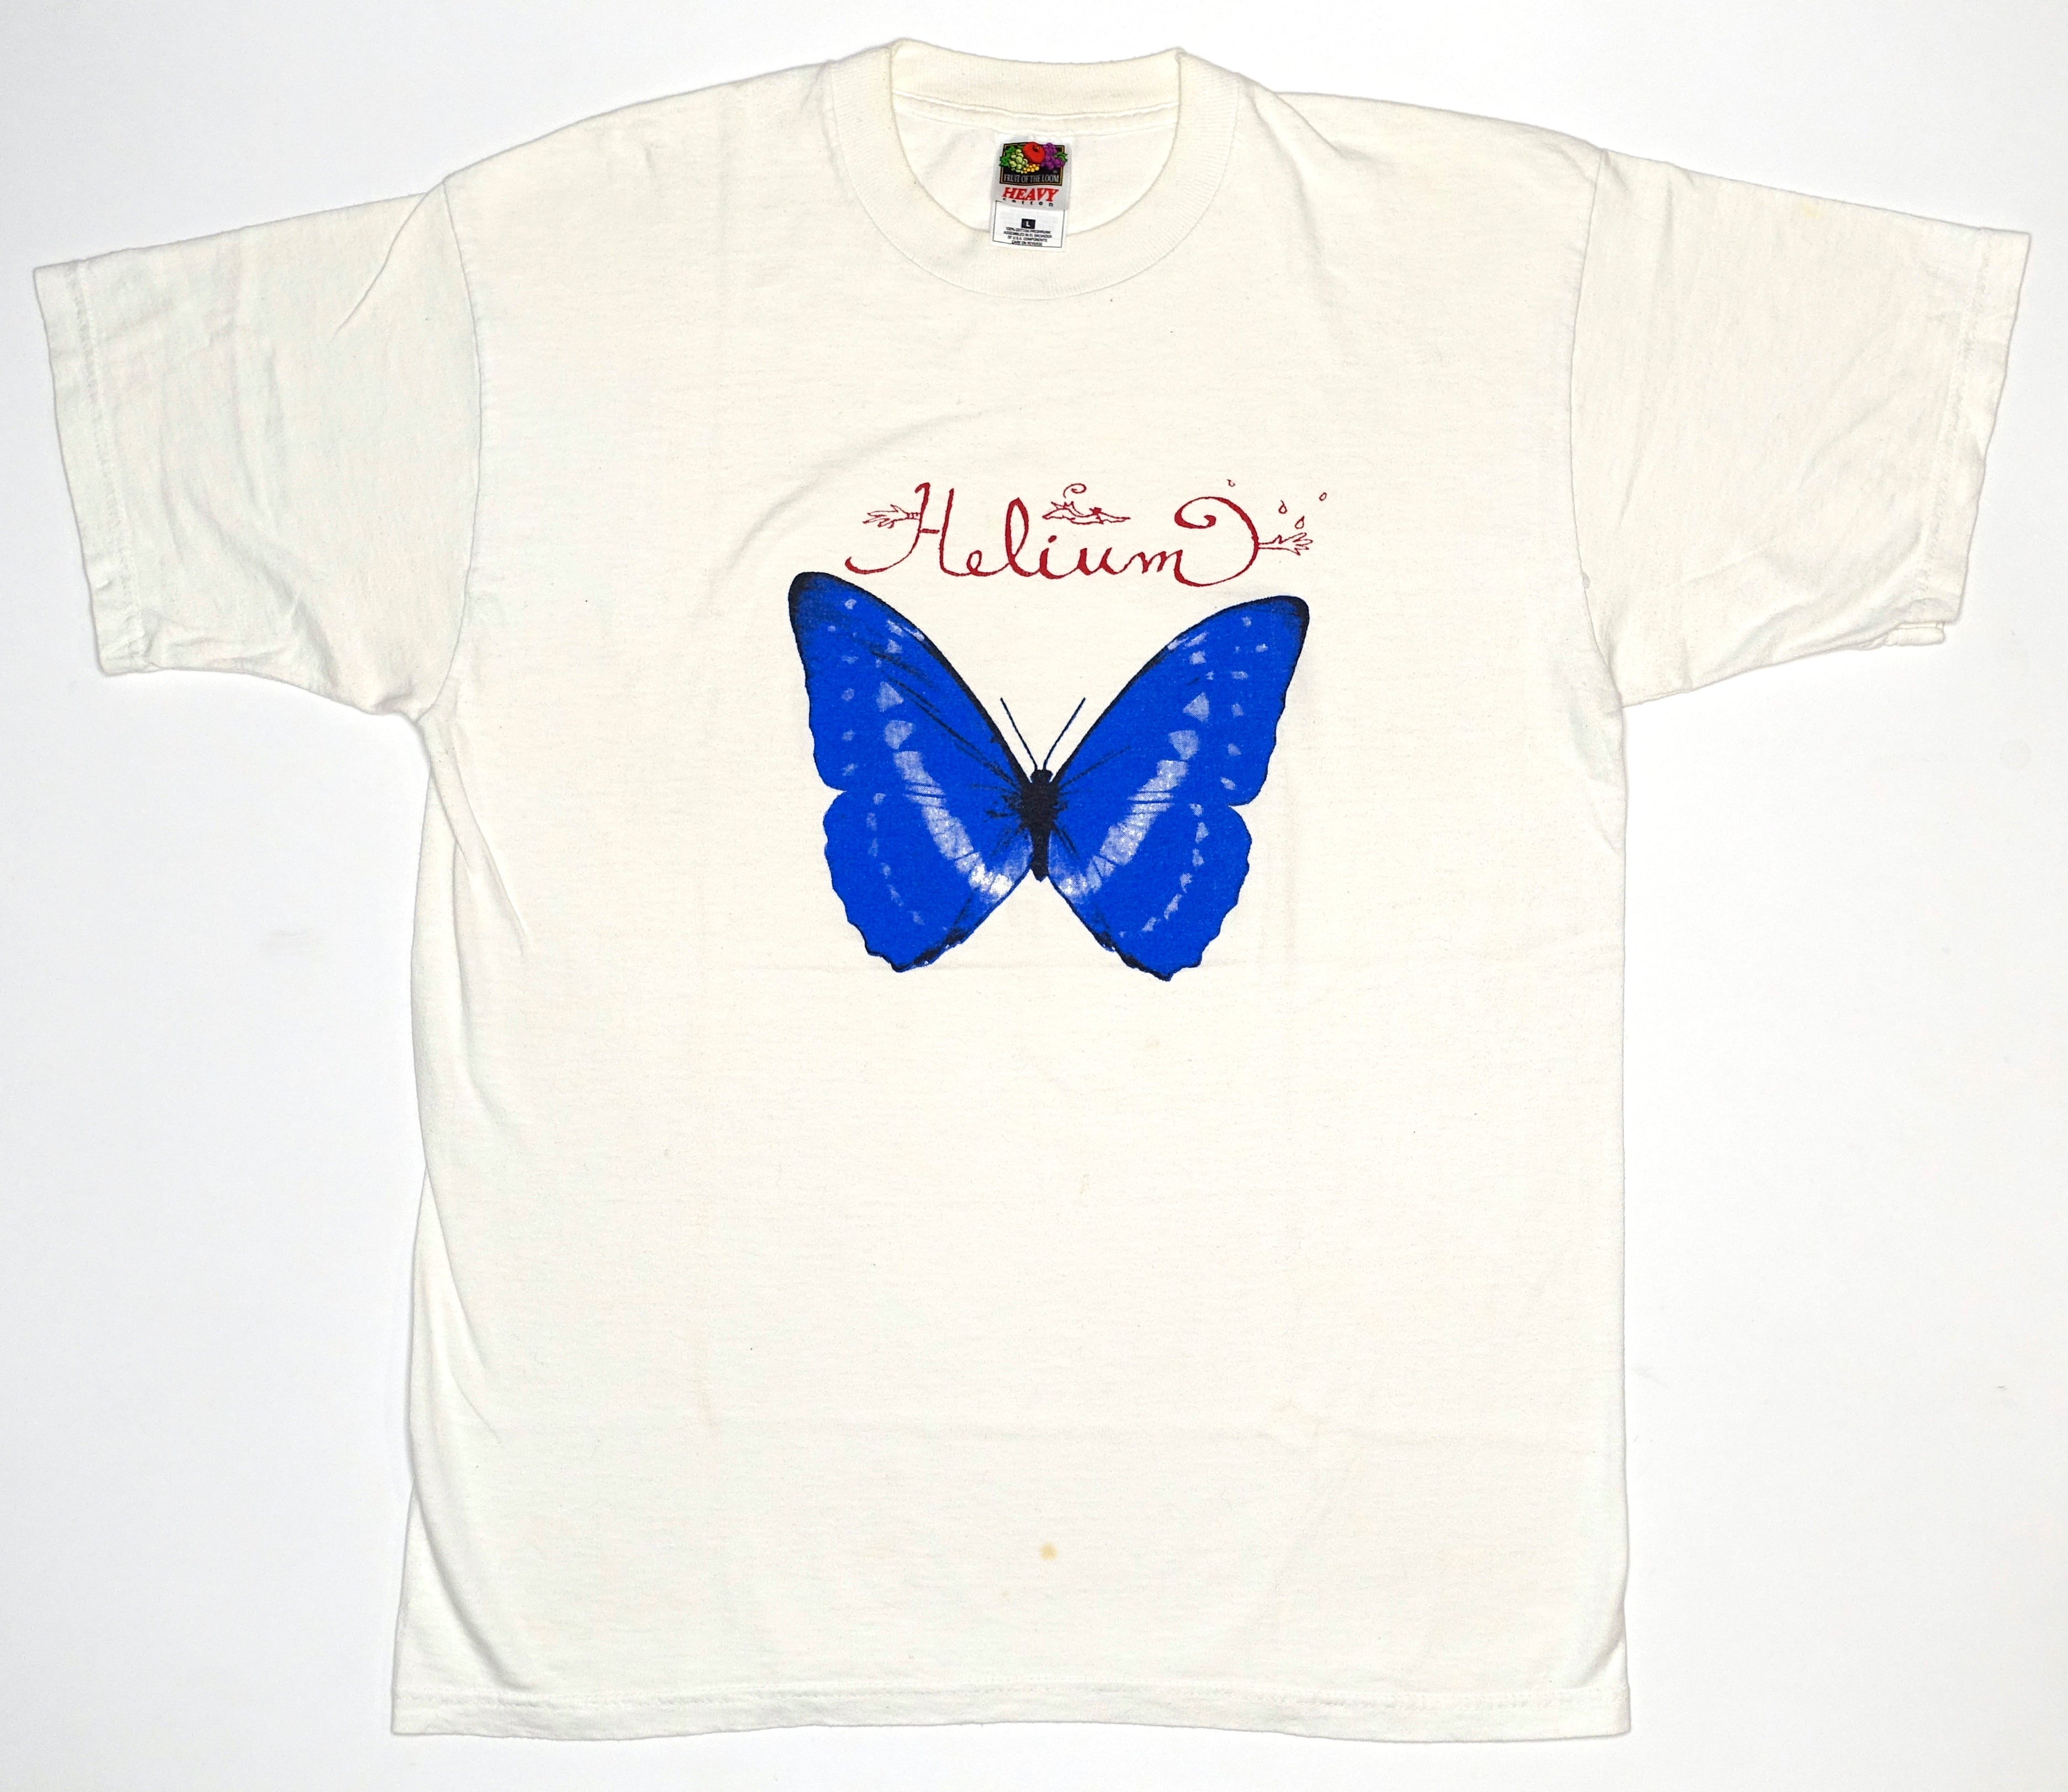 Helium – Magic City / No Guitars 1997 Tour Shirt Size Large (White)